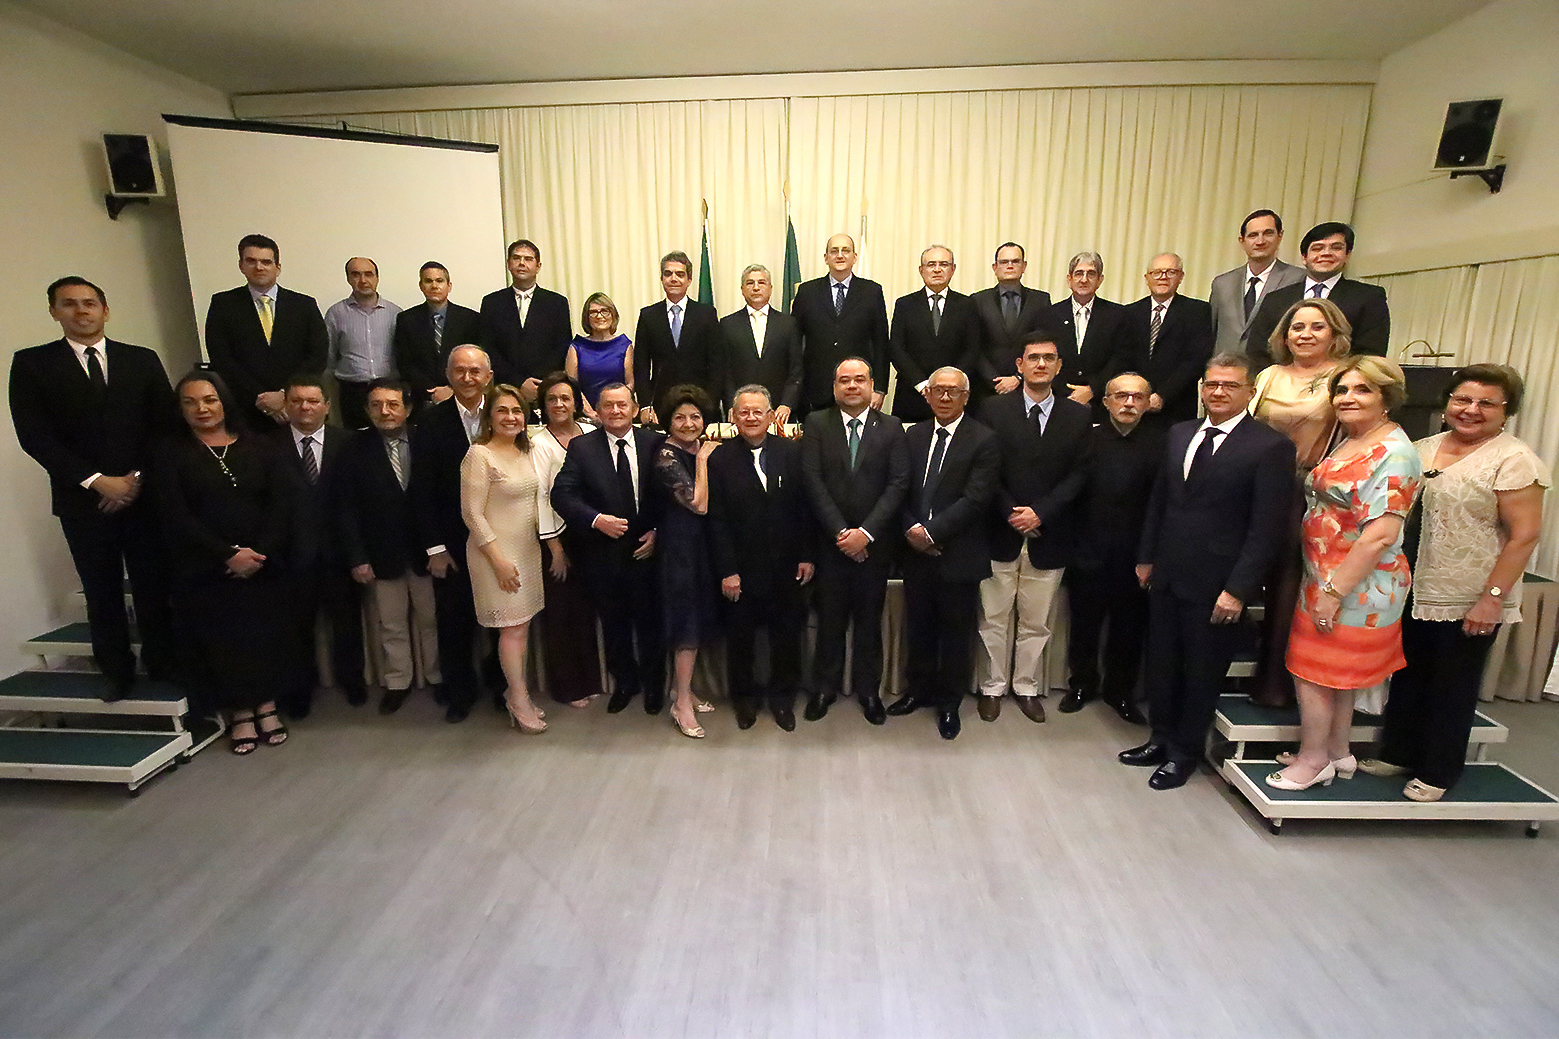 Membros do corpo de conselheiros do CREMERN quinquênio 2018/2023